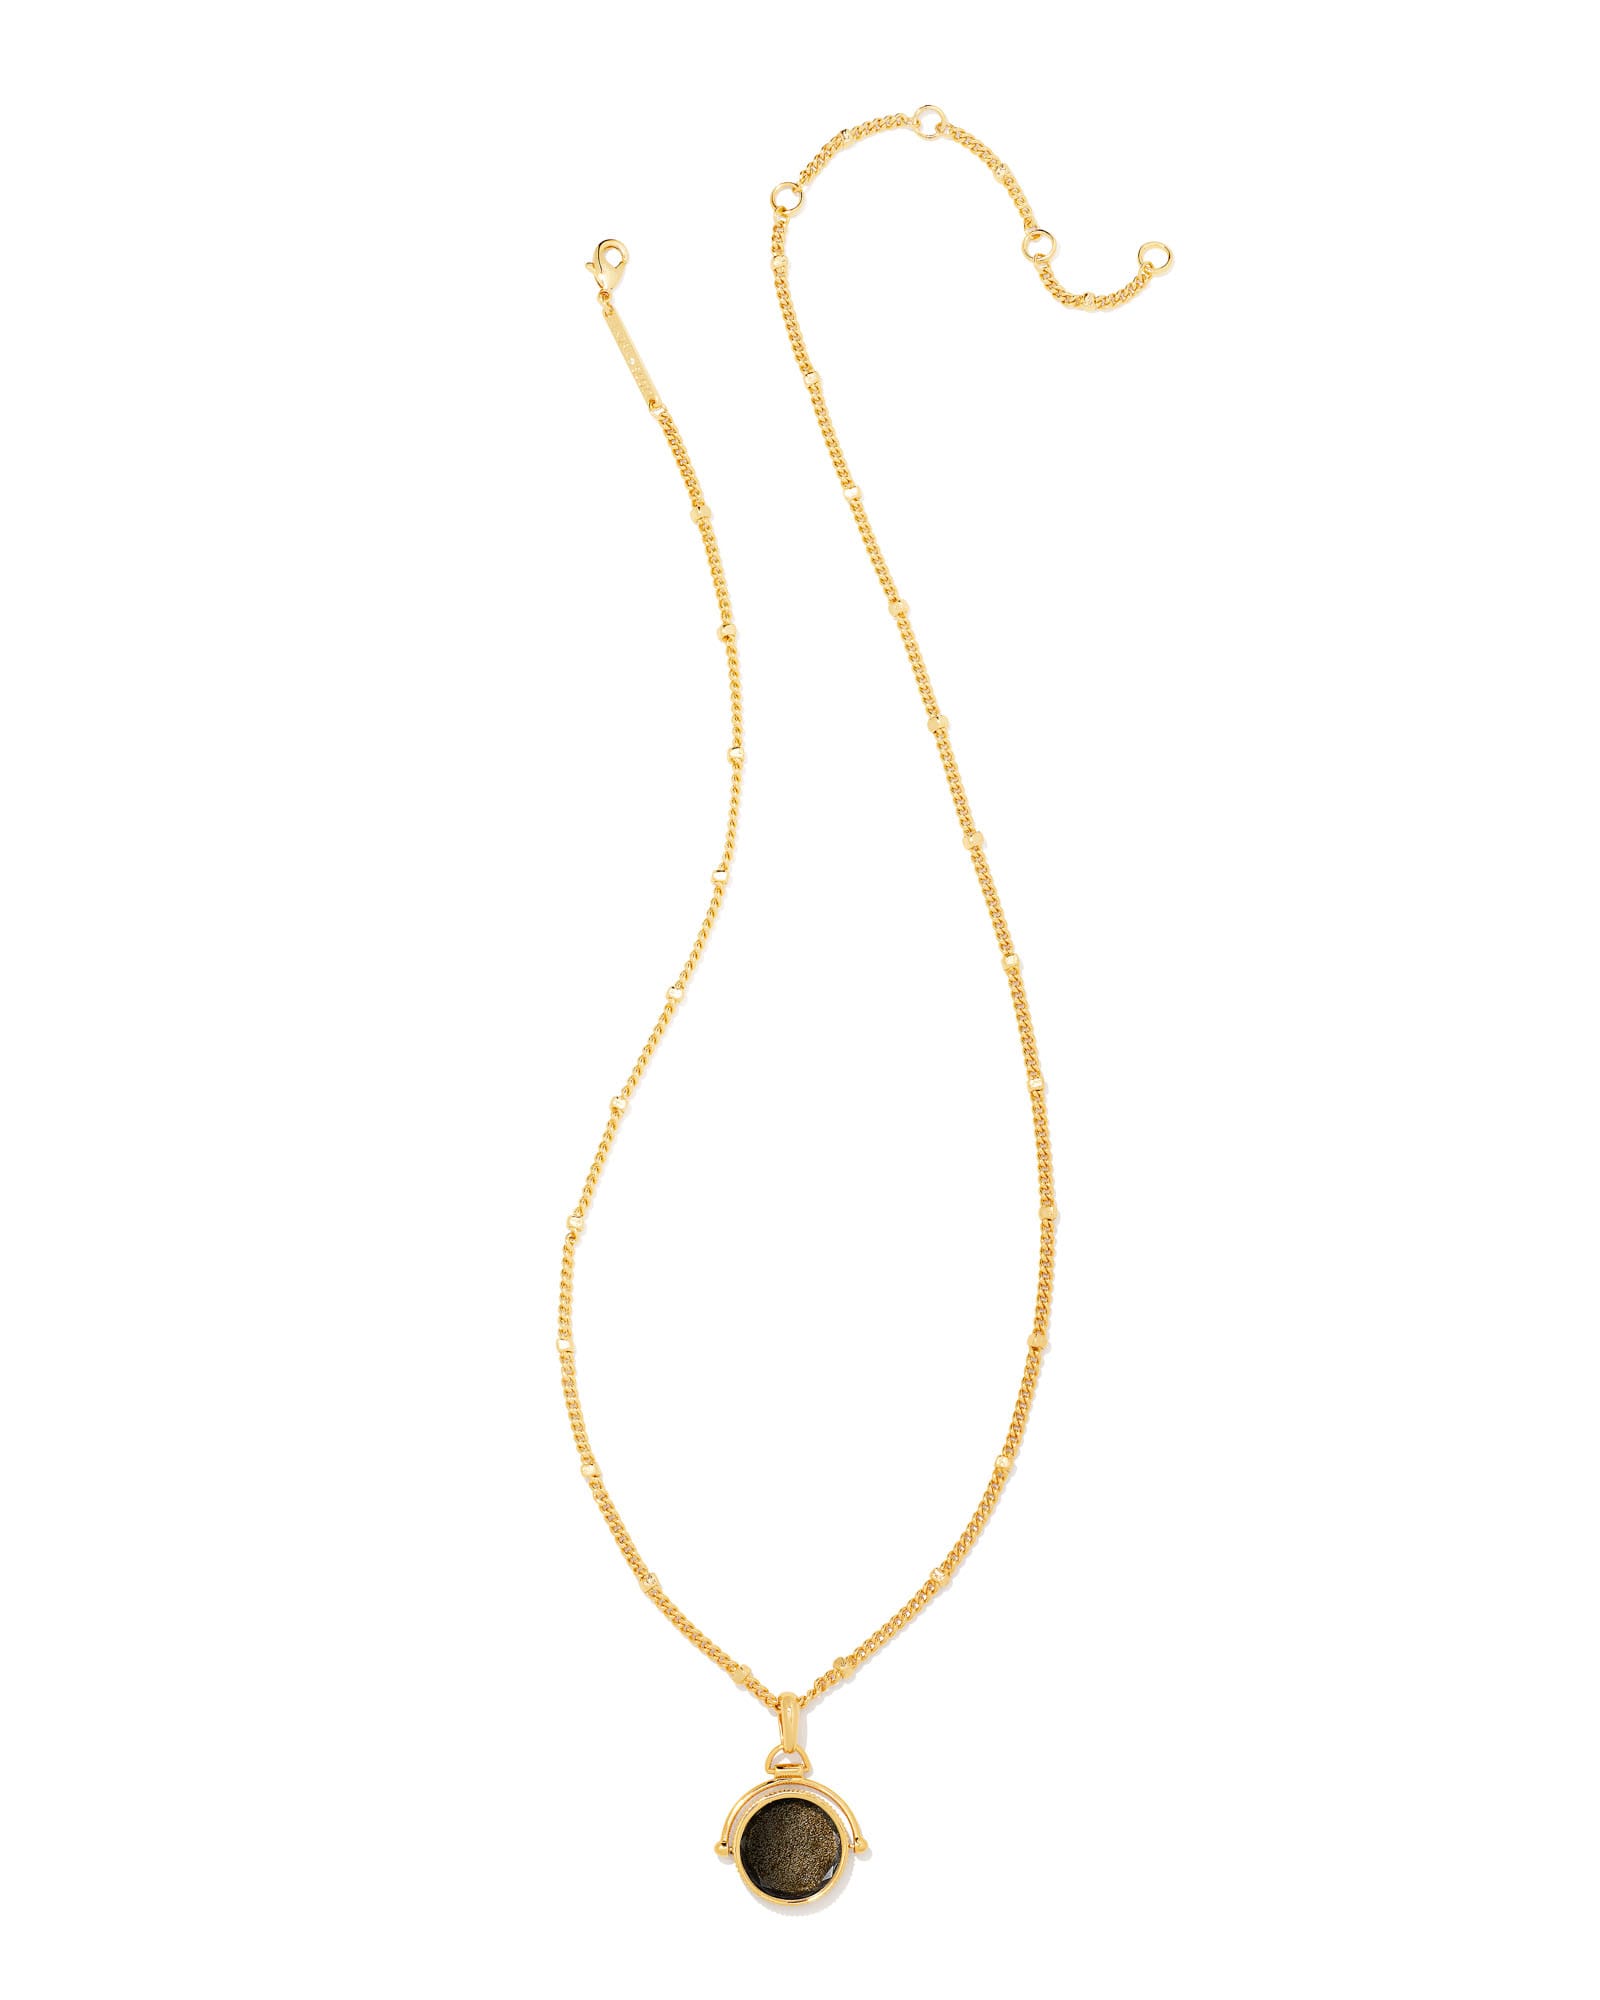 Dira Gold Reversible Pendant Necklace in Golden Obsidian